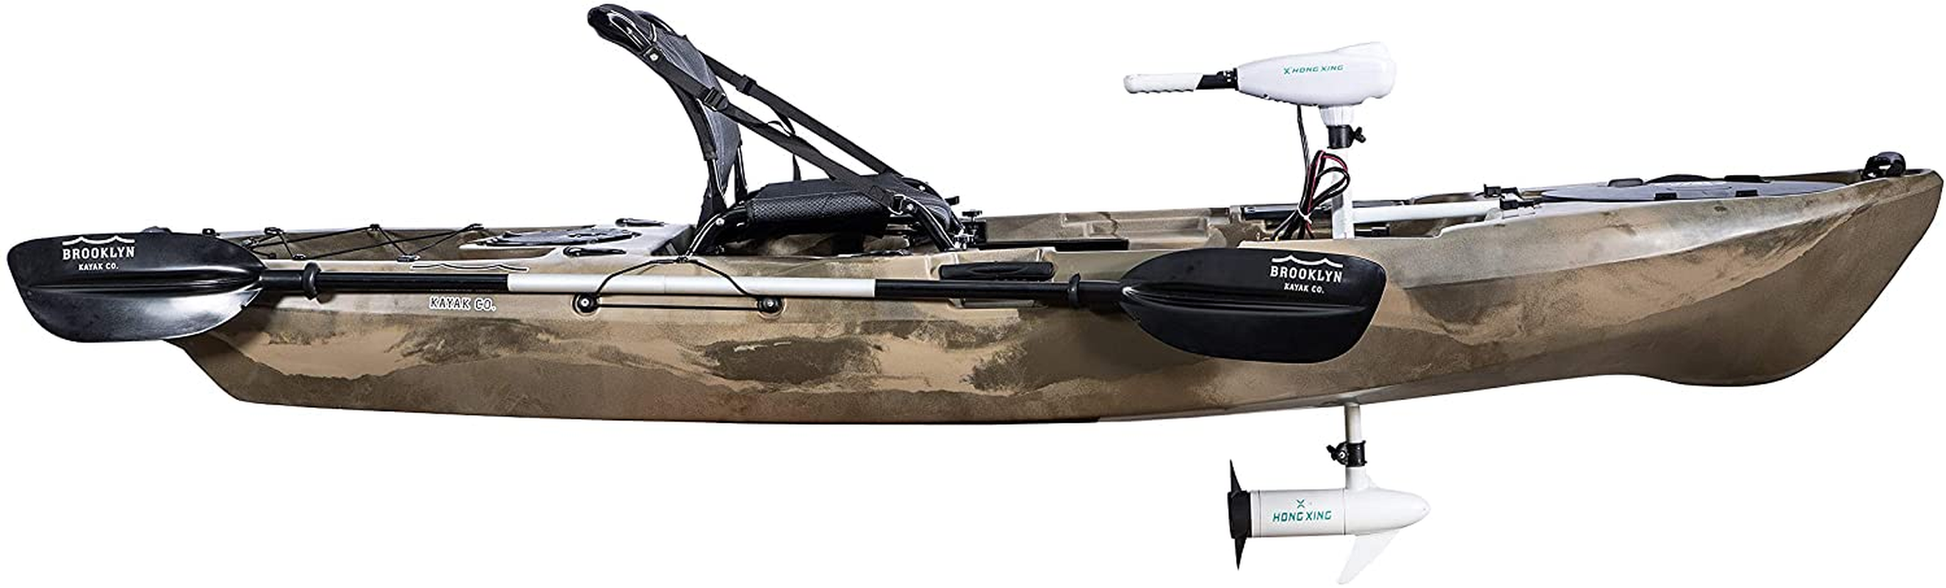 BKCPK11 Solo Sit-On-Top Fishing Kayak with Trolling Motor